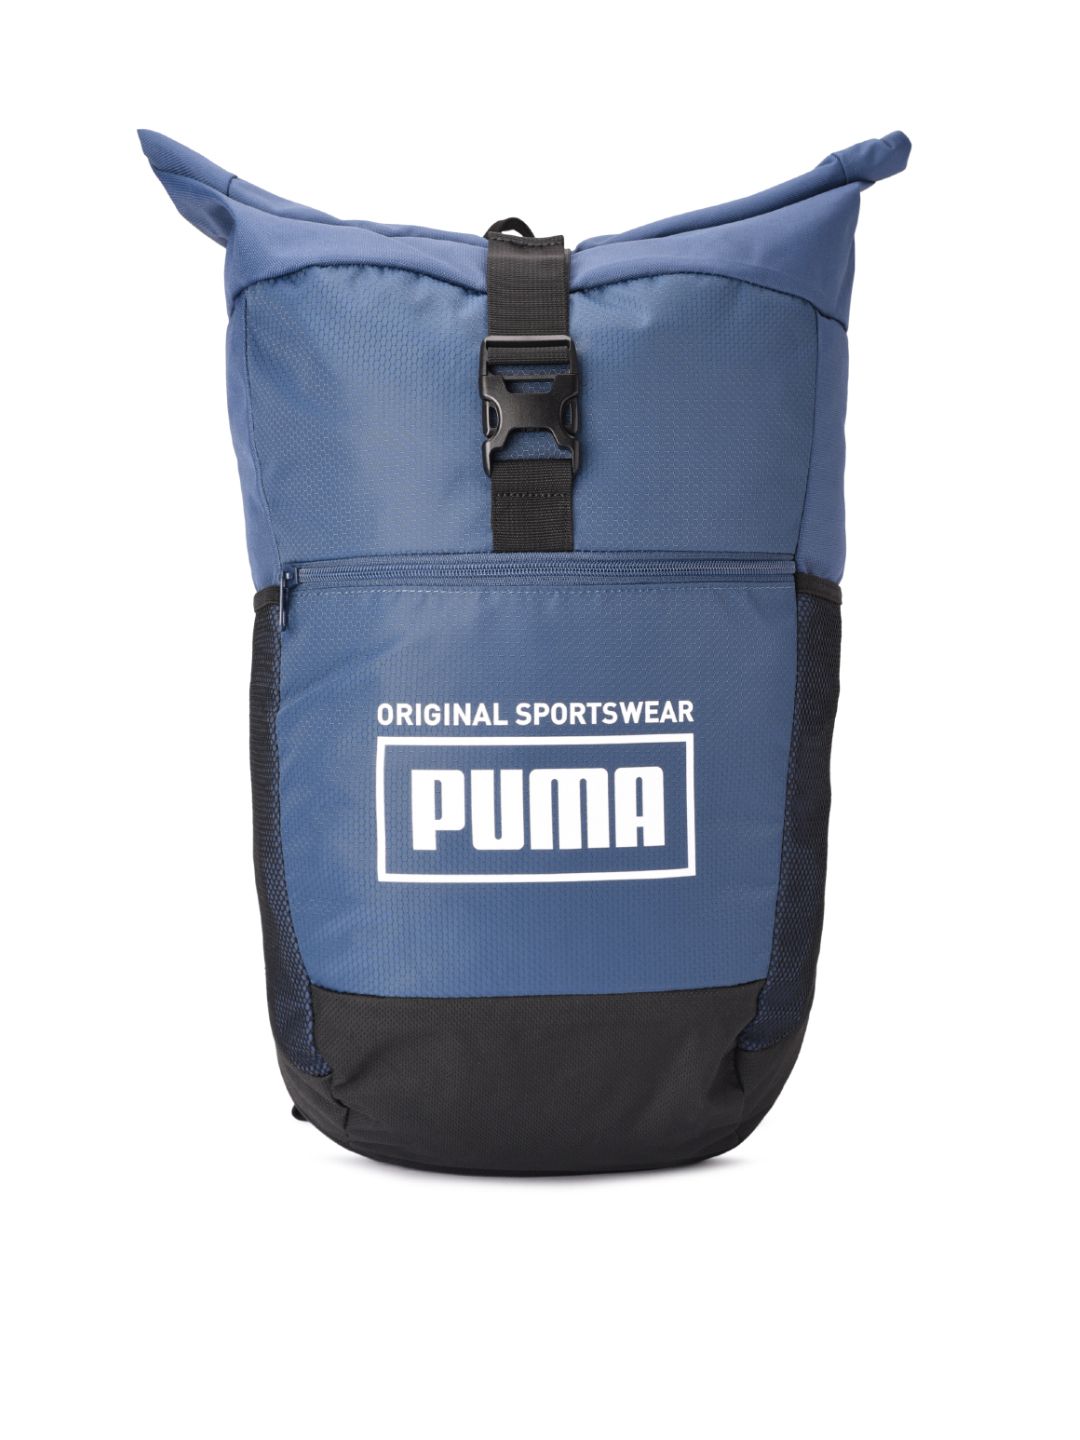 Puma Unisex Blue & Black Sole Backpack Price in India